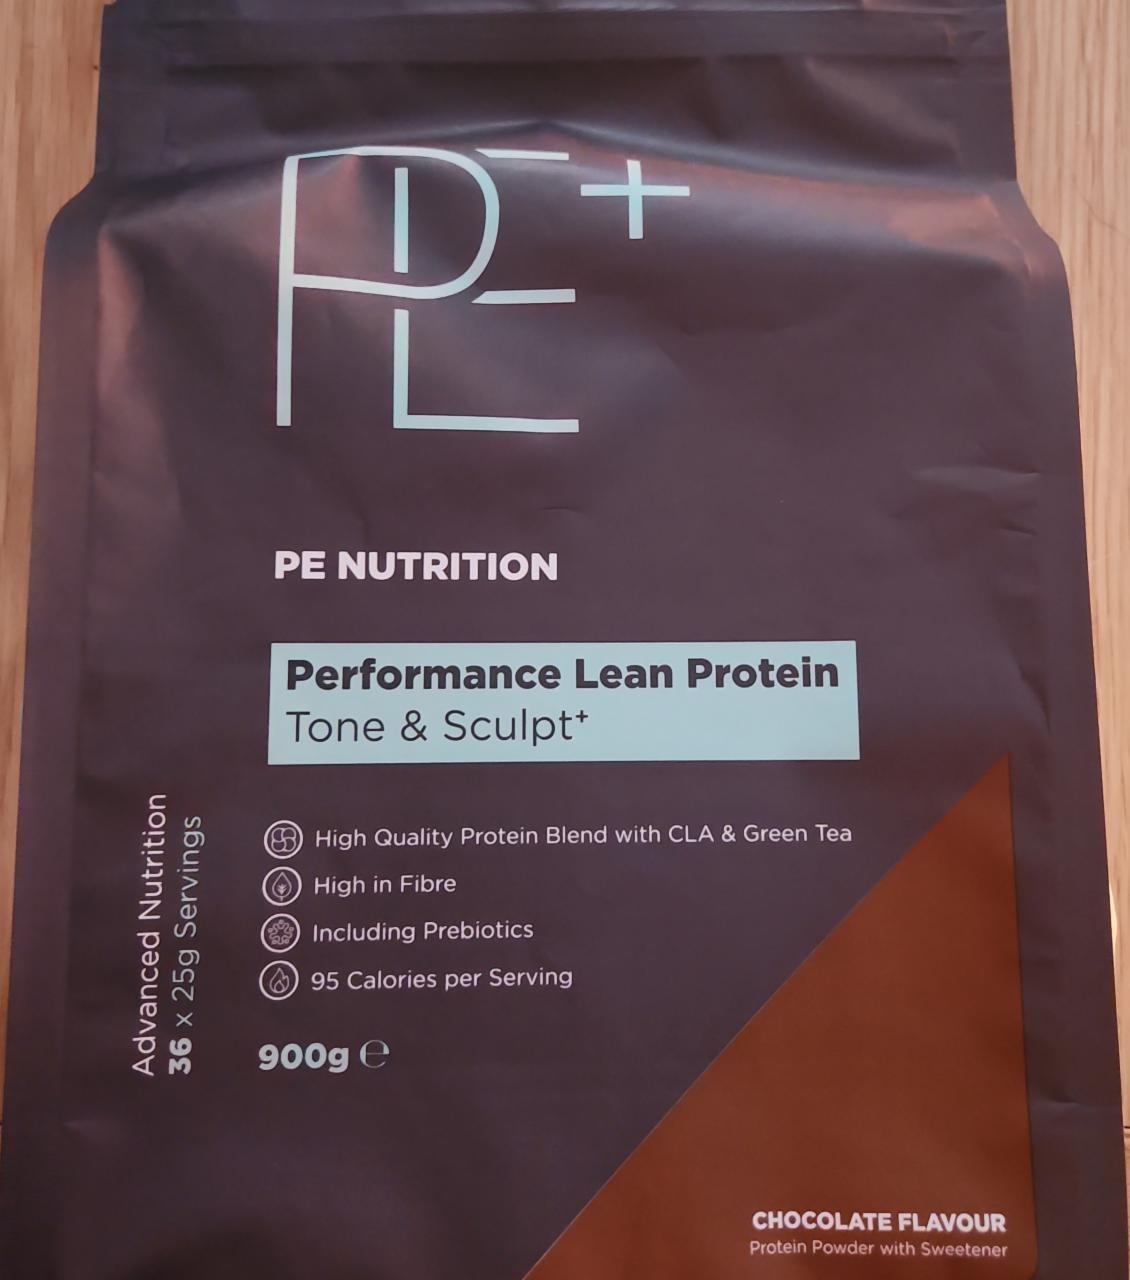 Fotografie - Performance Lean Protein Chocolate flavour PE Nutrition